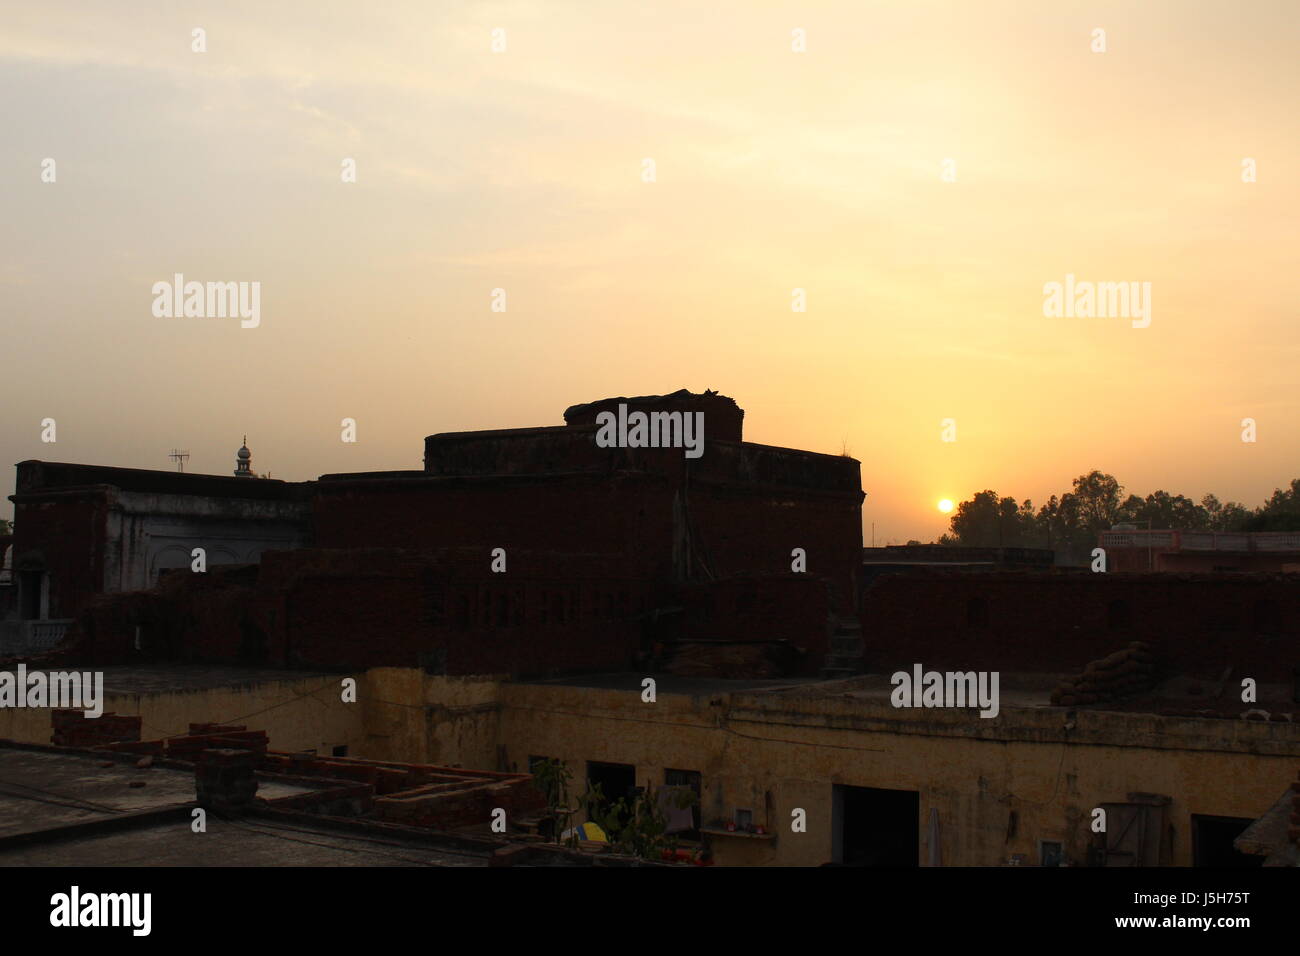 Dorf-Nacht-Shooting mit Sonnenuntergang. Stockfoto